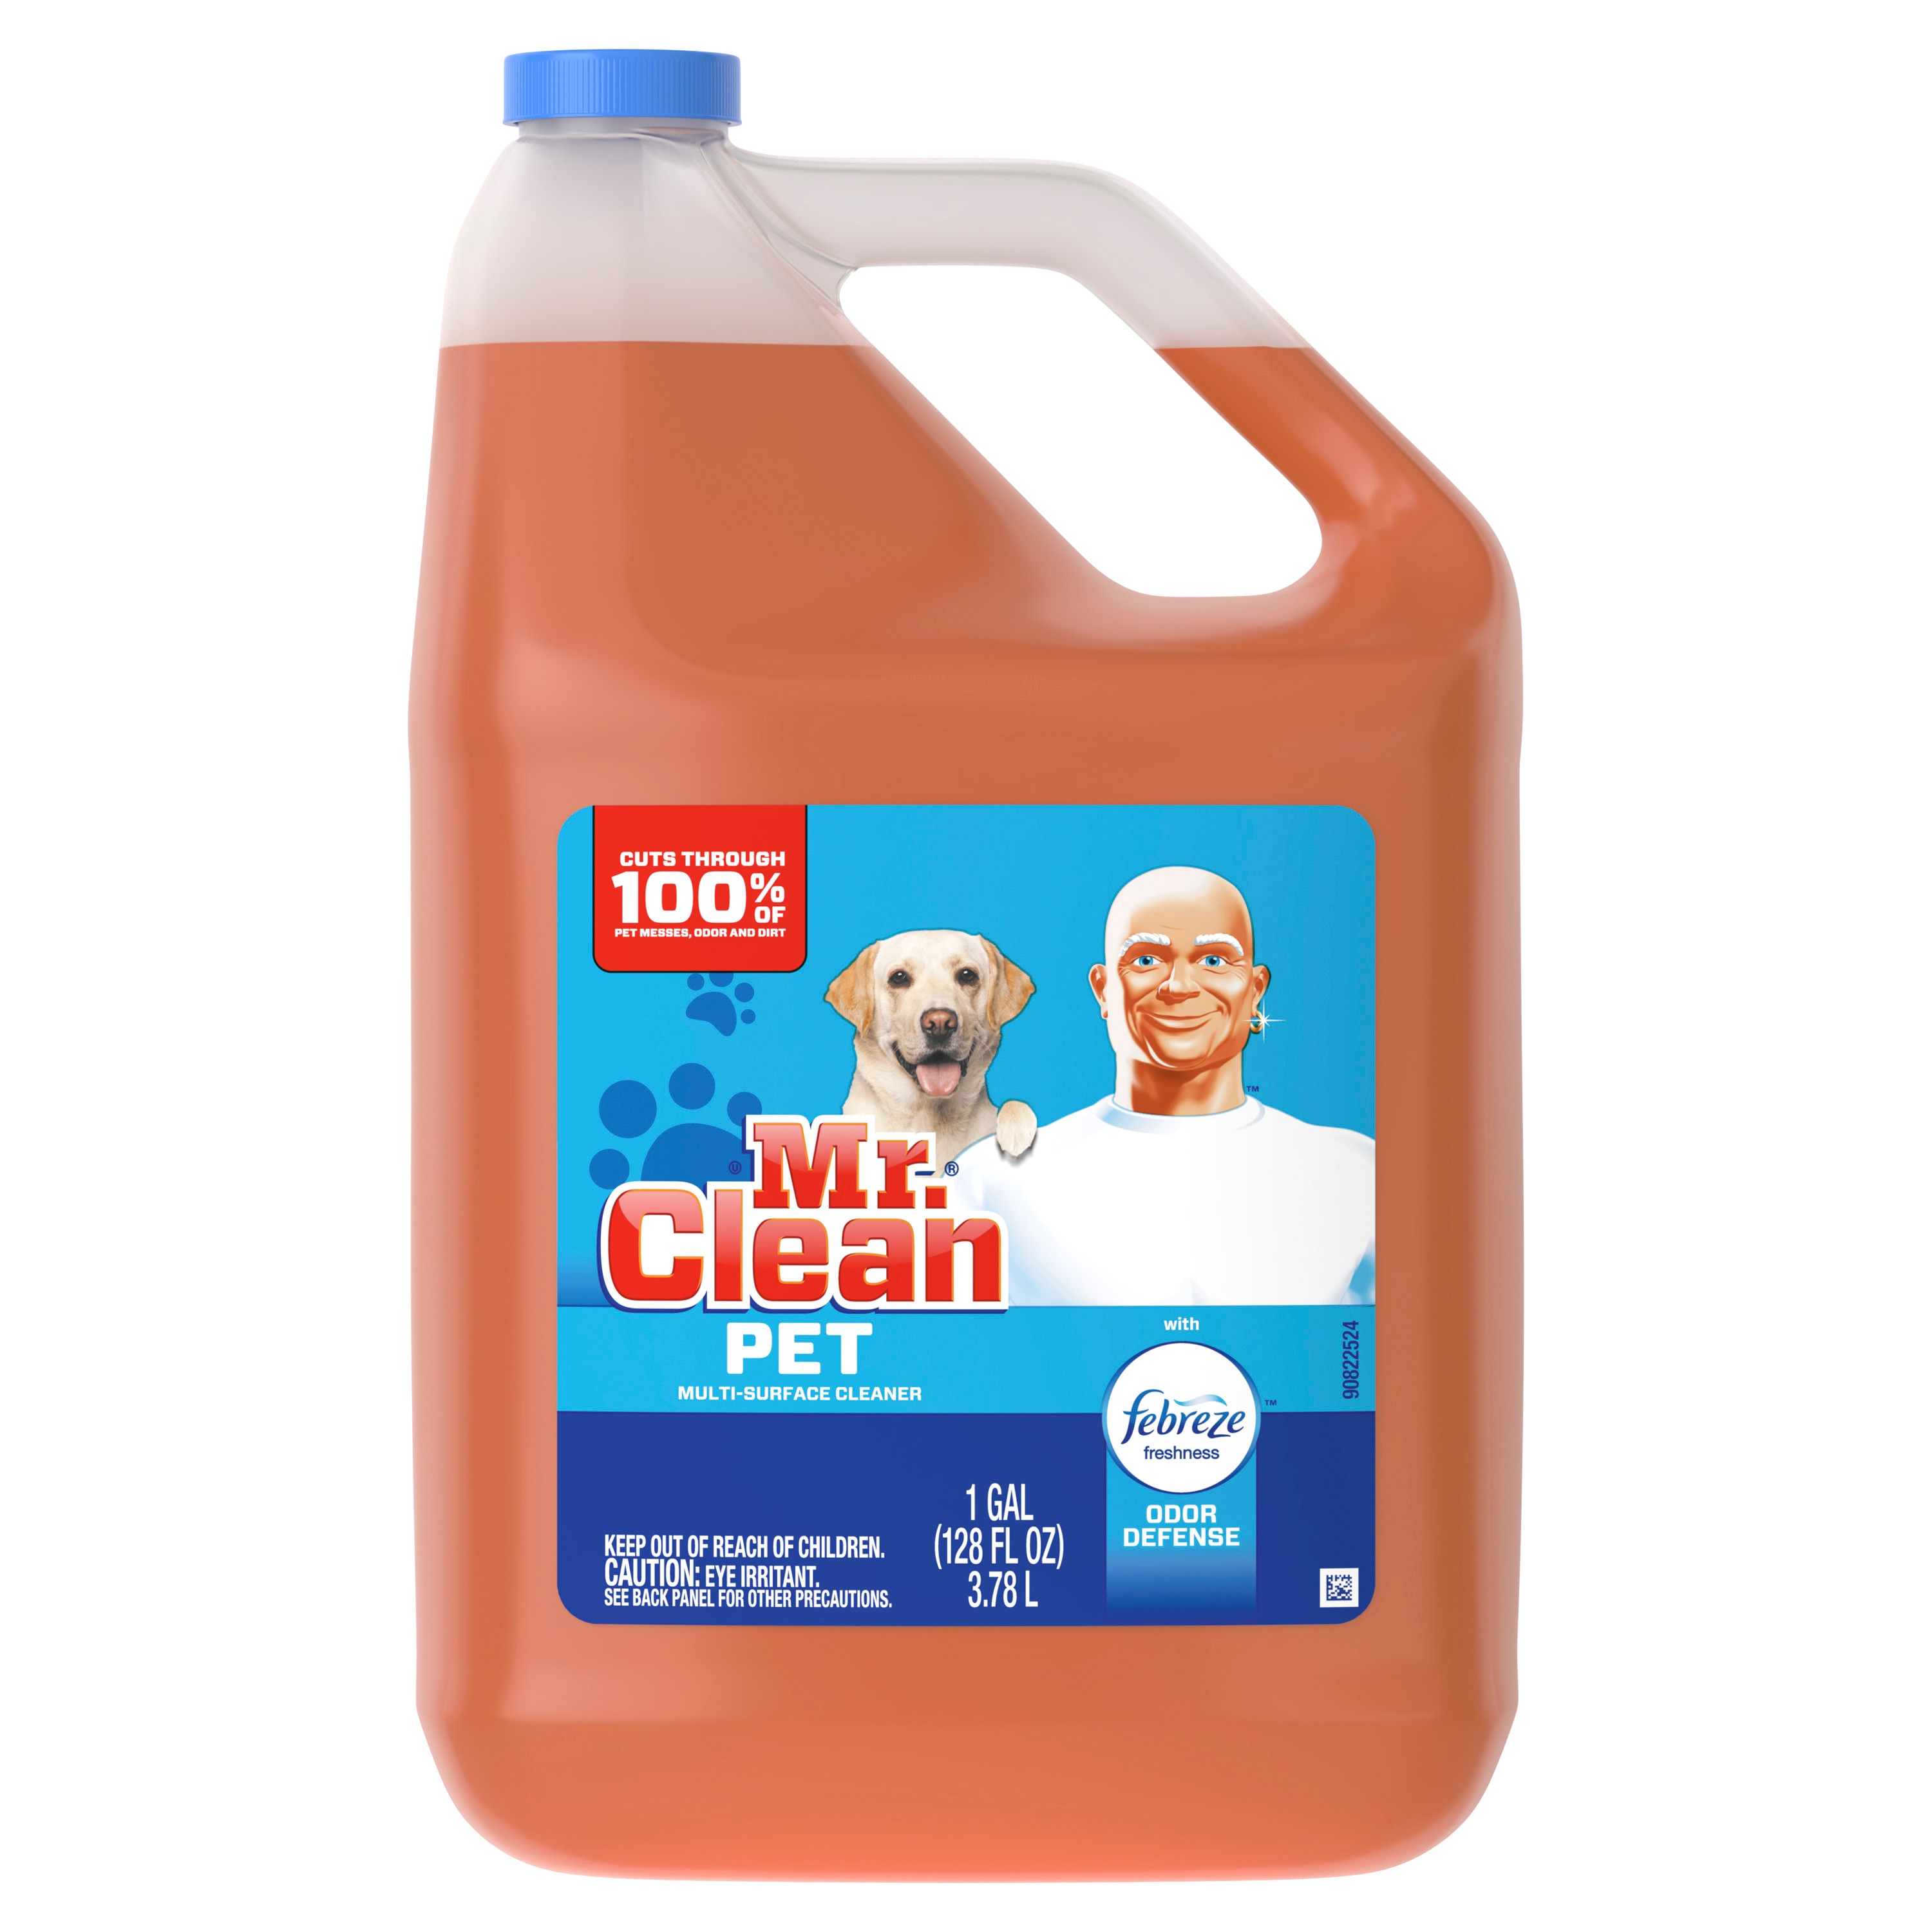 Pet cleaner. Clean Pet.